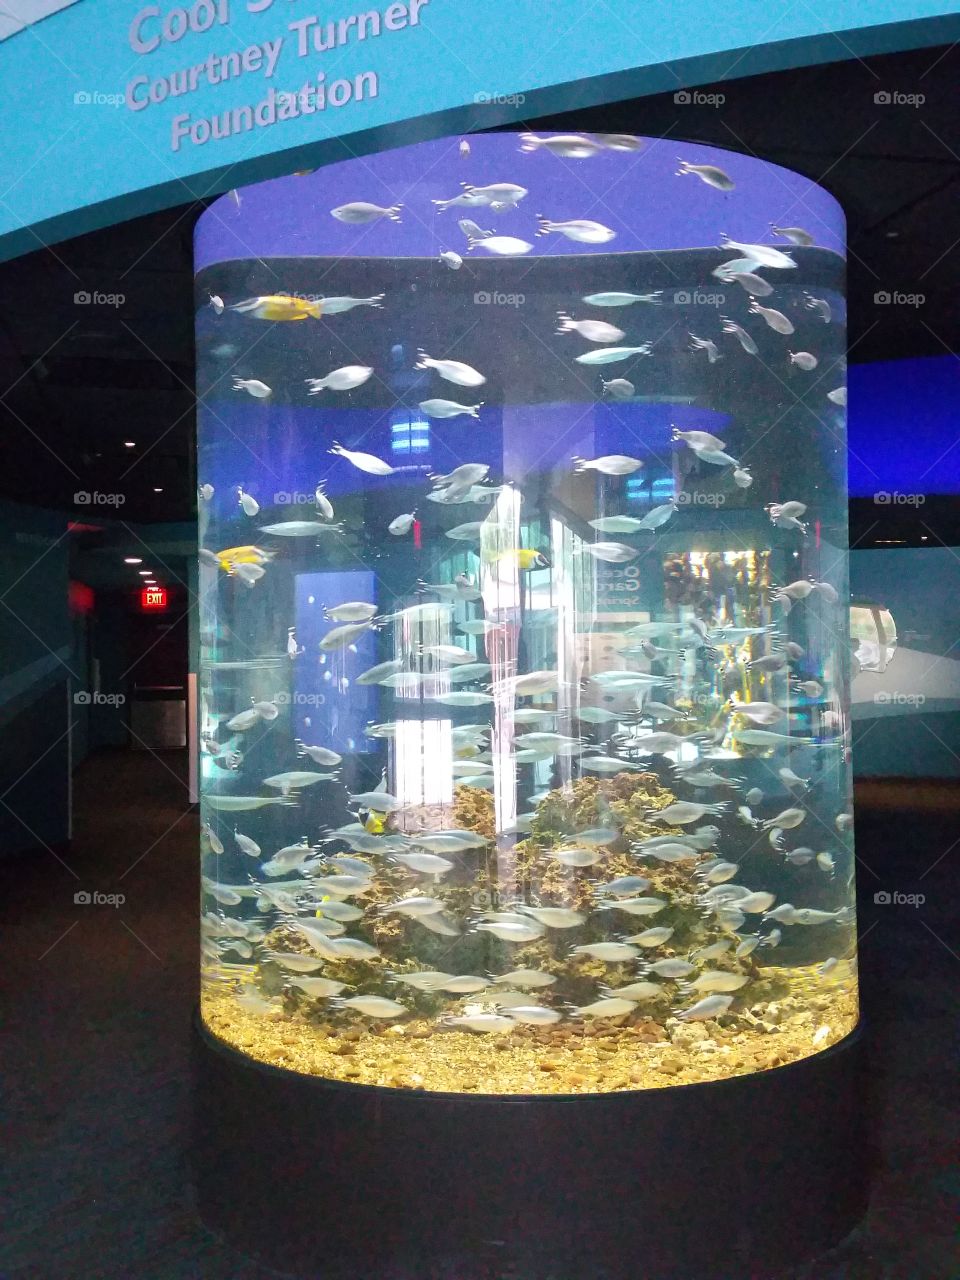 A tank full of fish